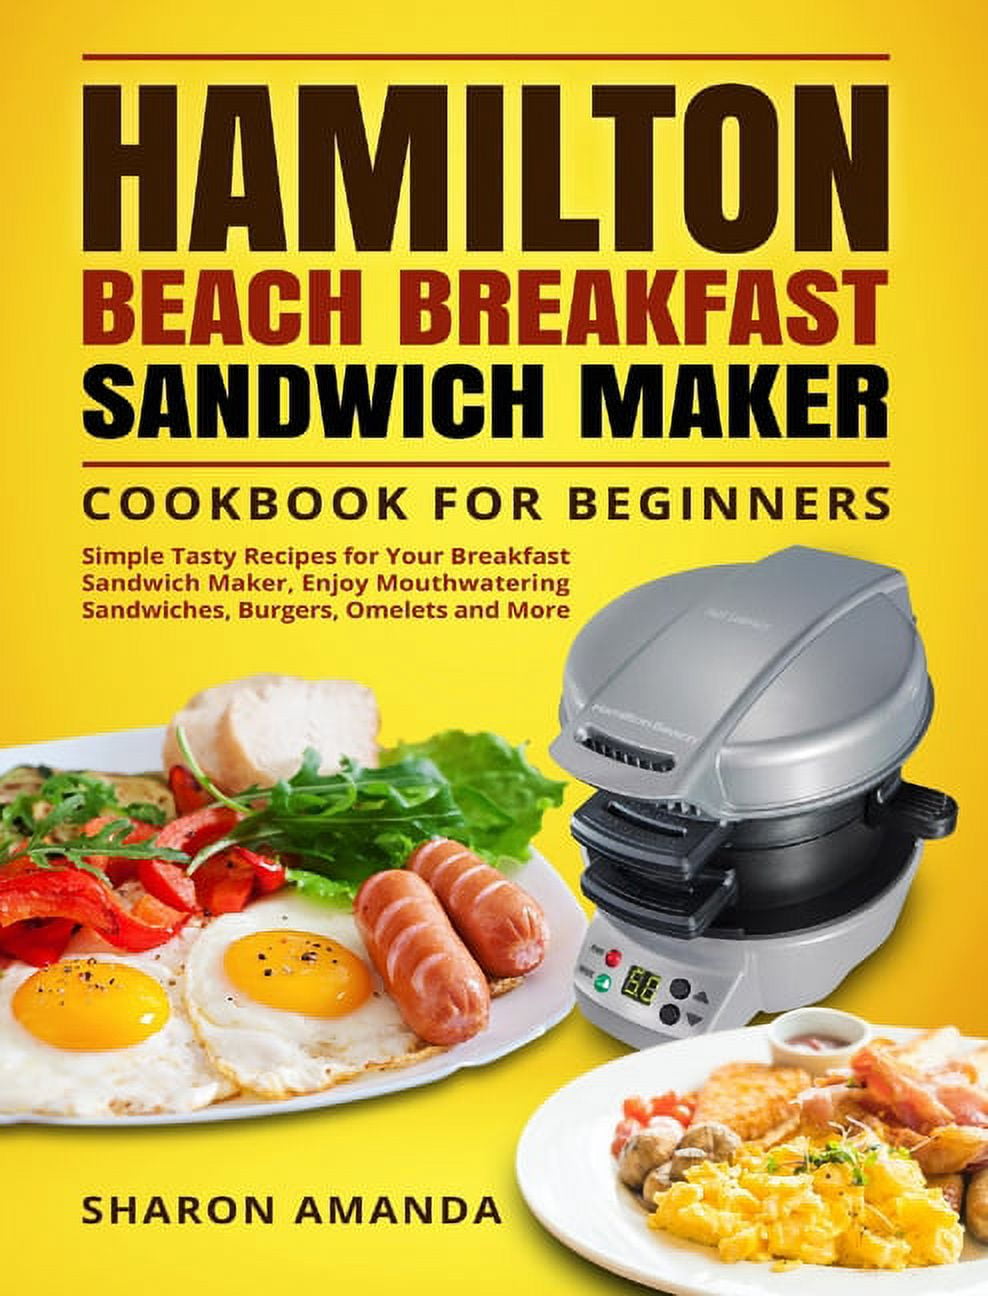 Hamilton Beach Breakfast Sandwich Maker Cookbook 2021-2022: 2000